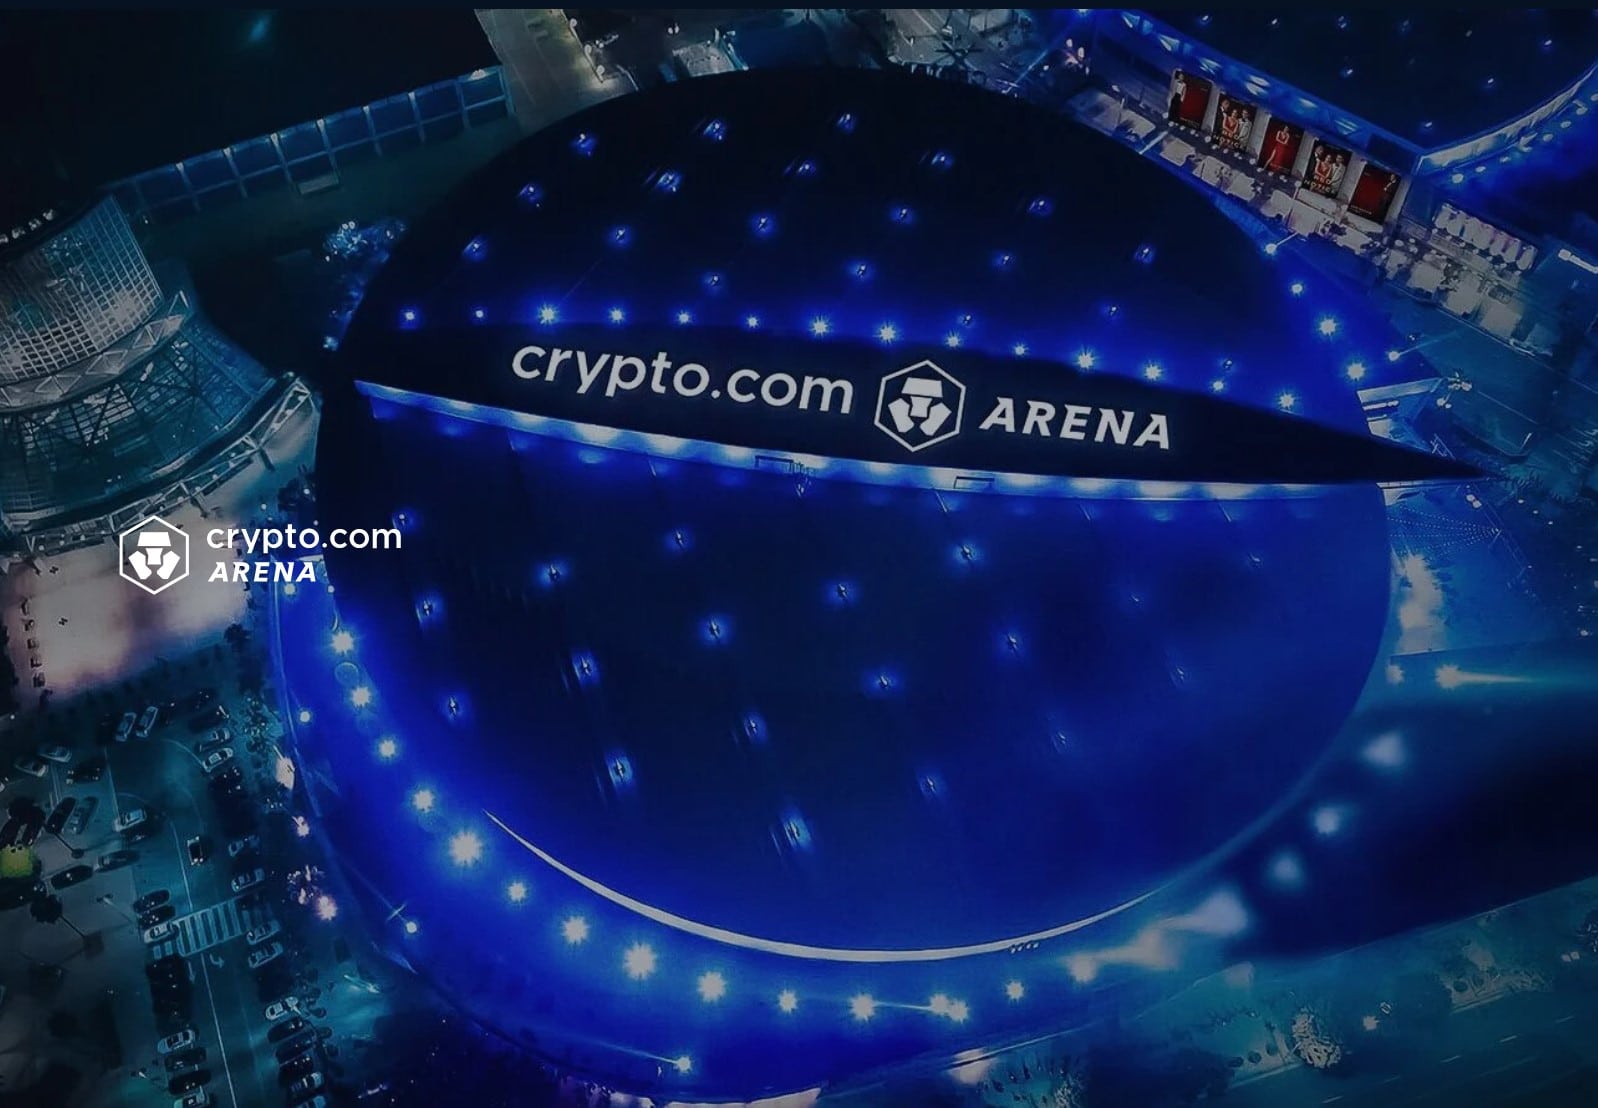 kripto.com arenası